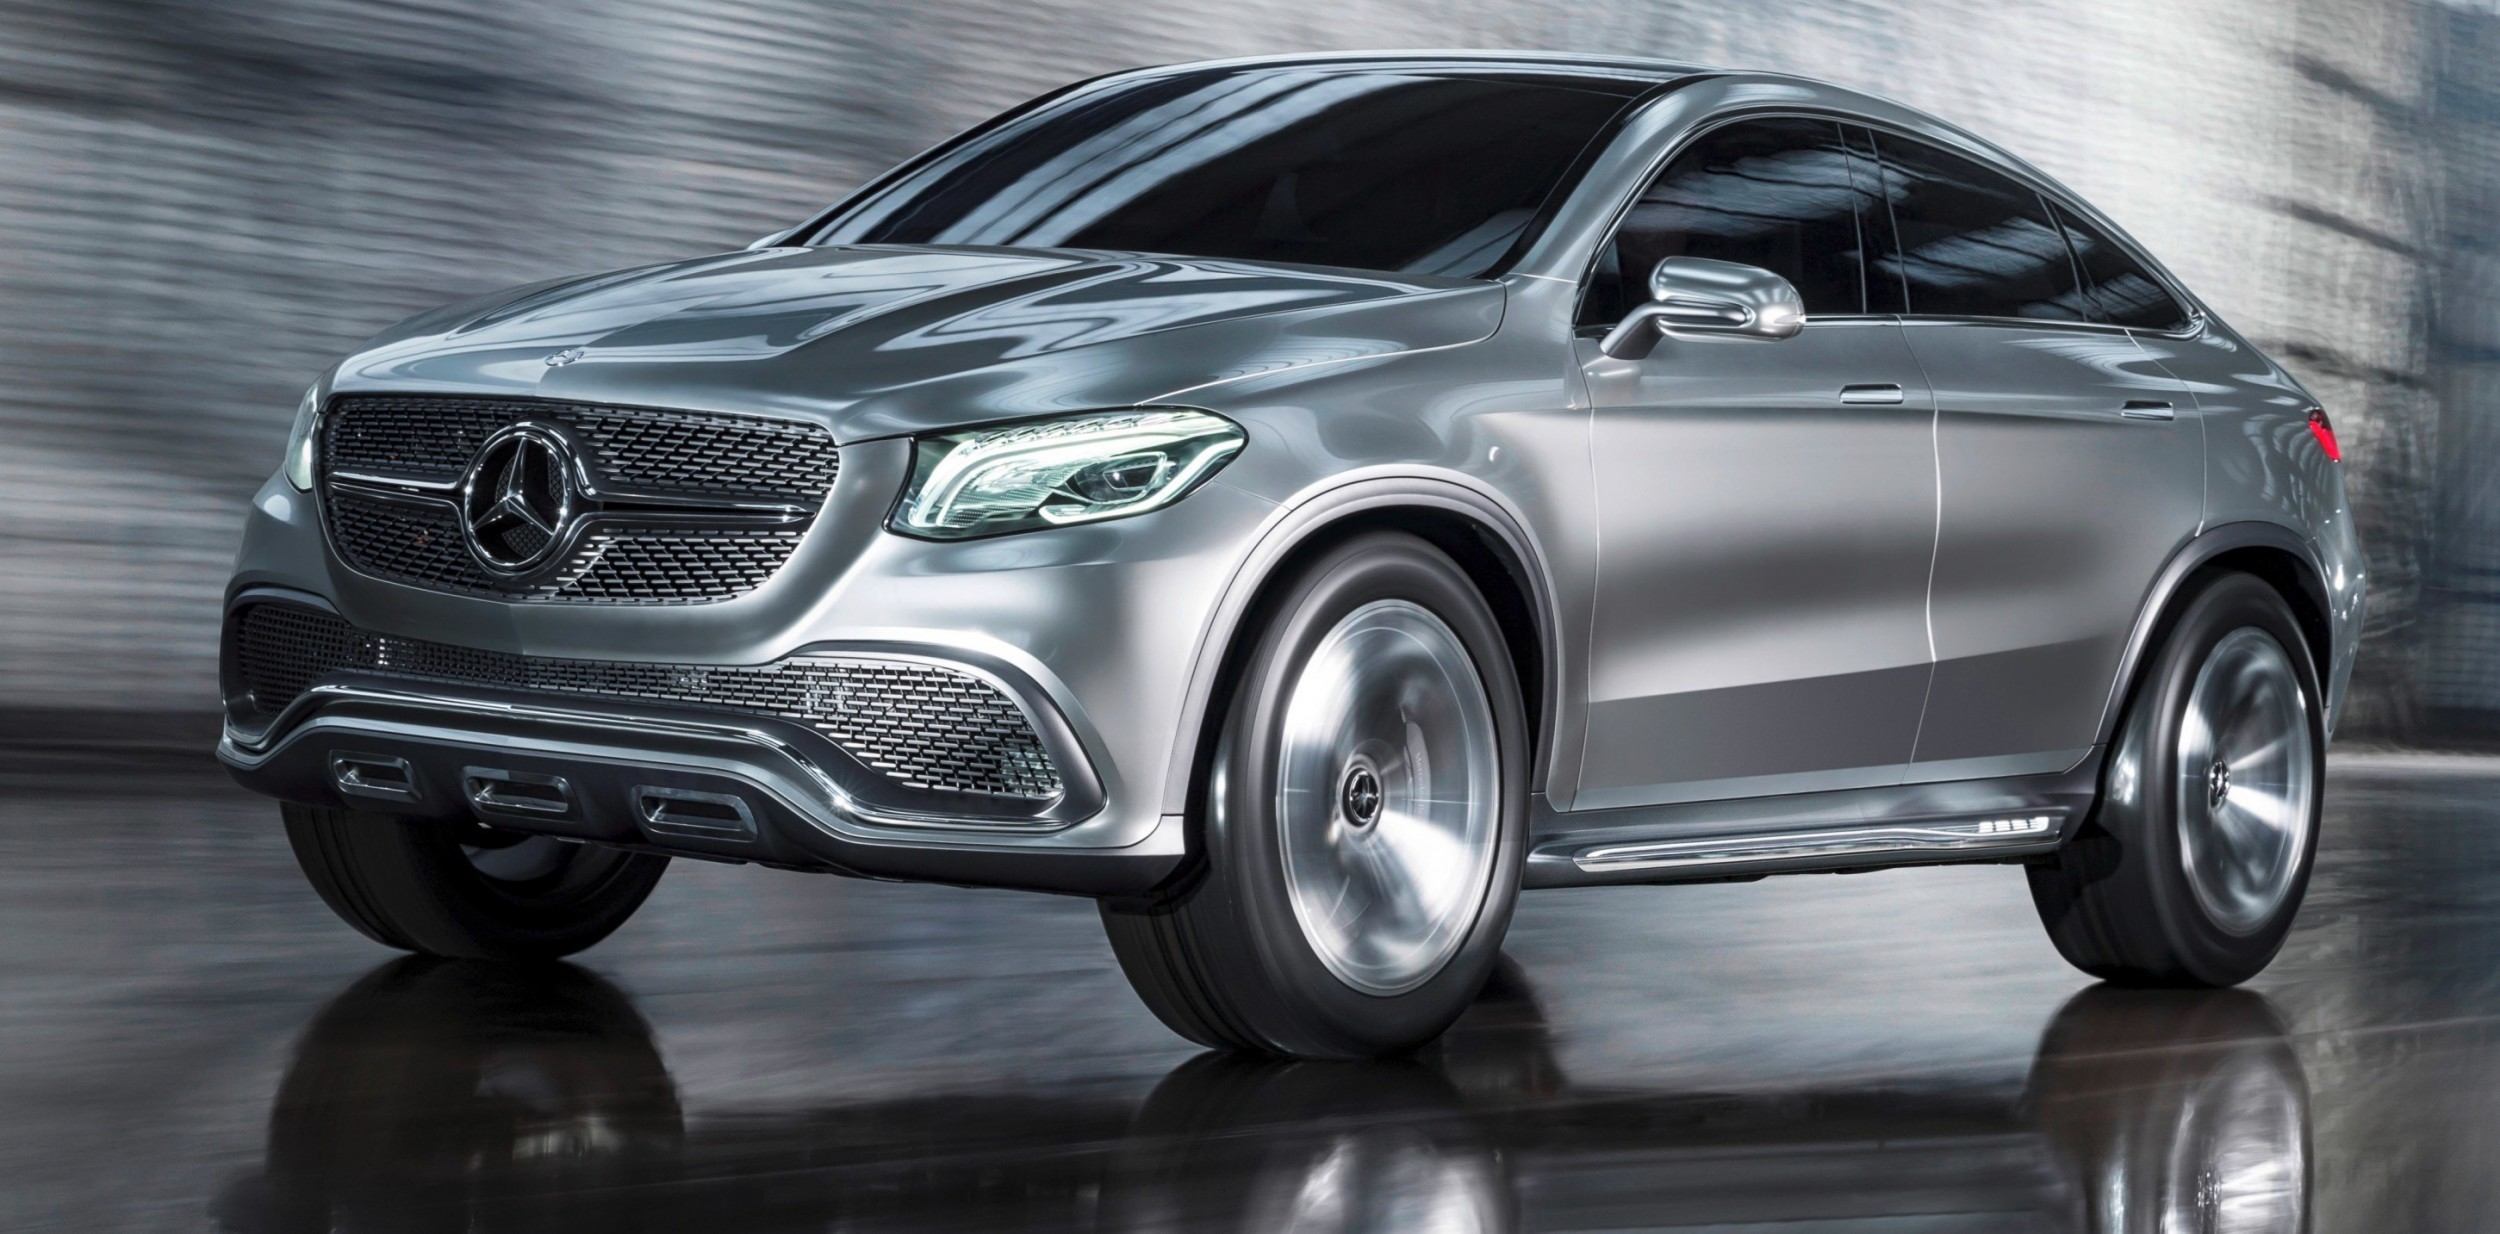 Mercedes-Benz Concept Coupe SUV - Beijing 2014 - Sets New Design Direction